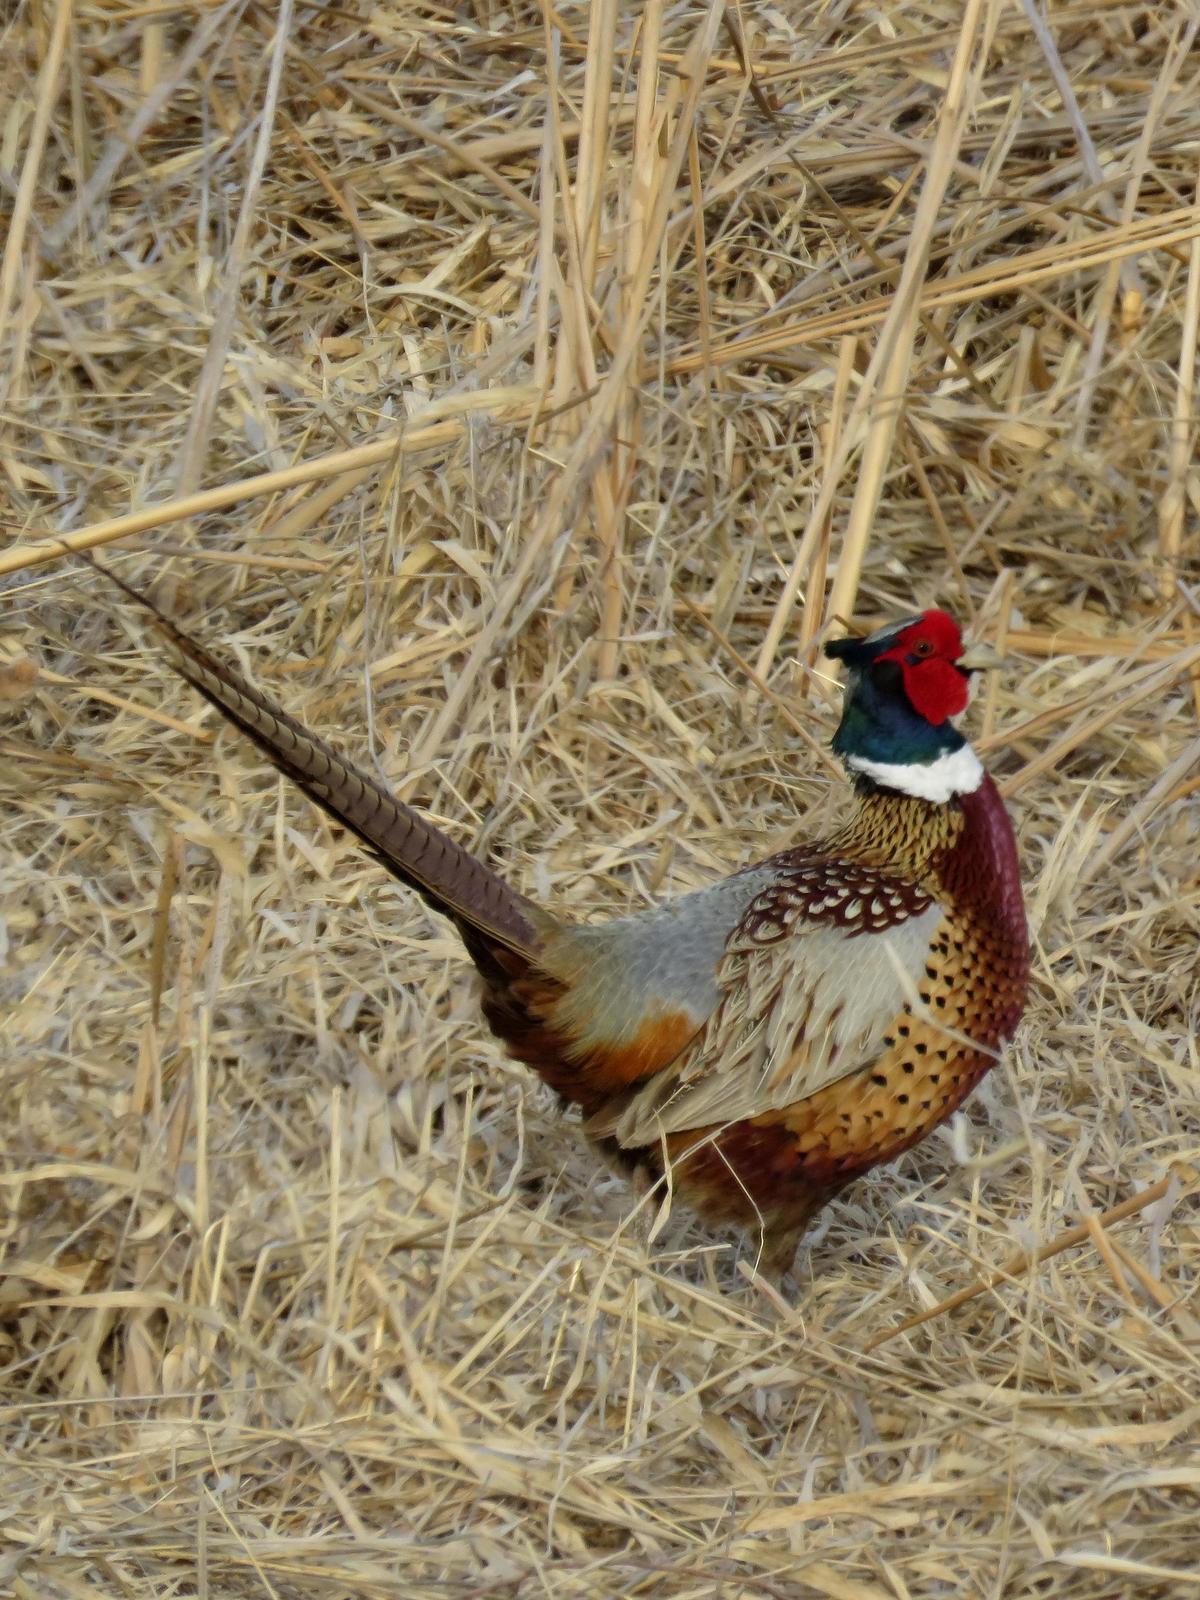 Ring-necked Pheasant Photo by Kent Jensen